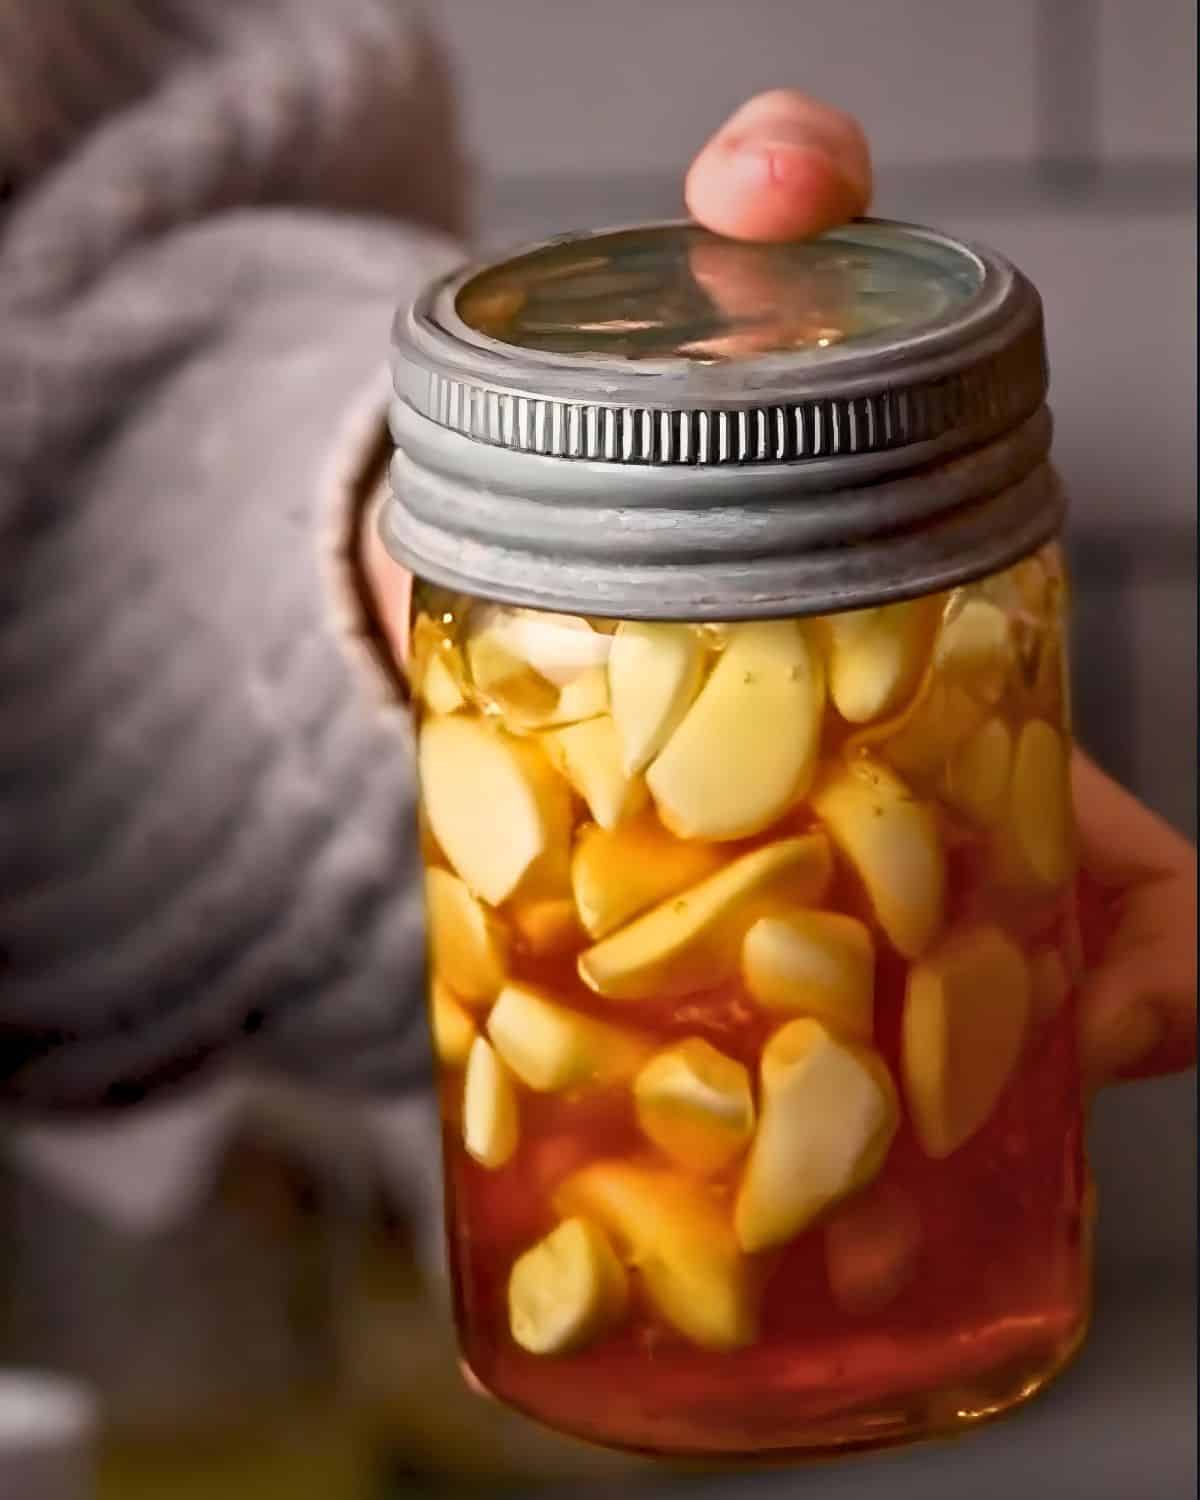 a hand holding a jar of fermented honey garlic